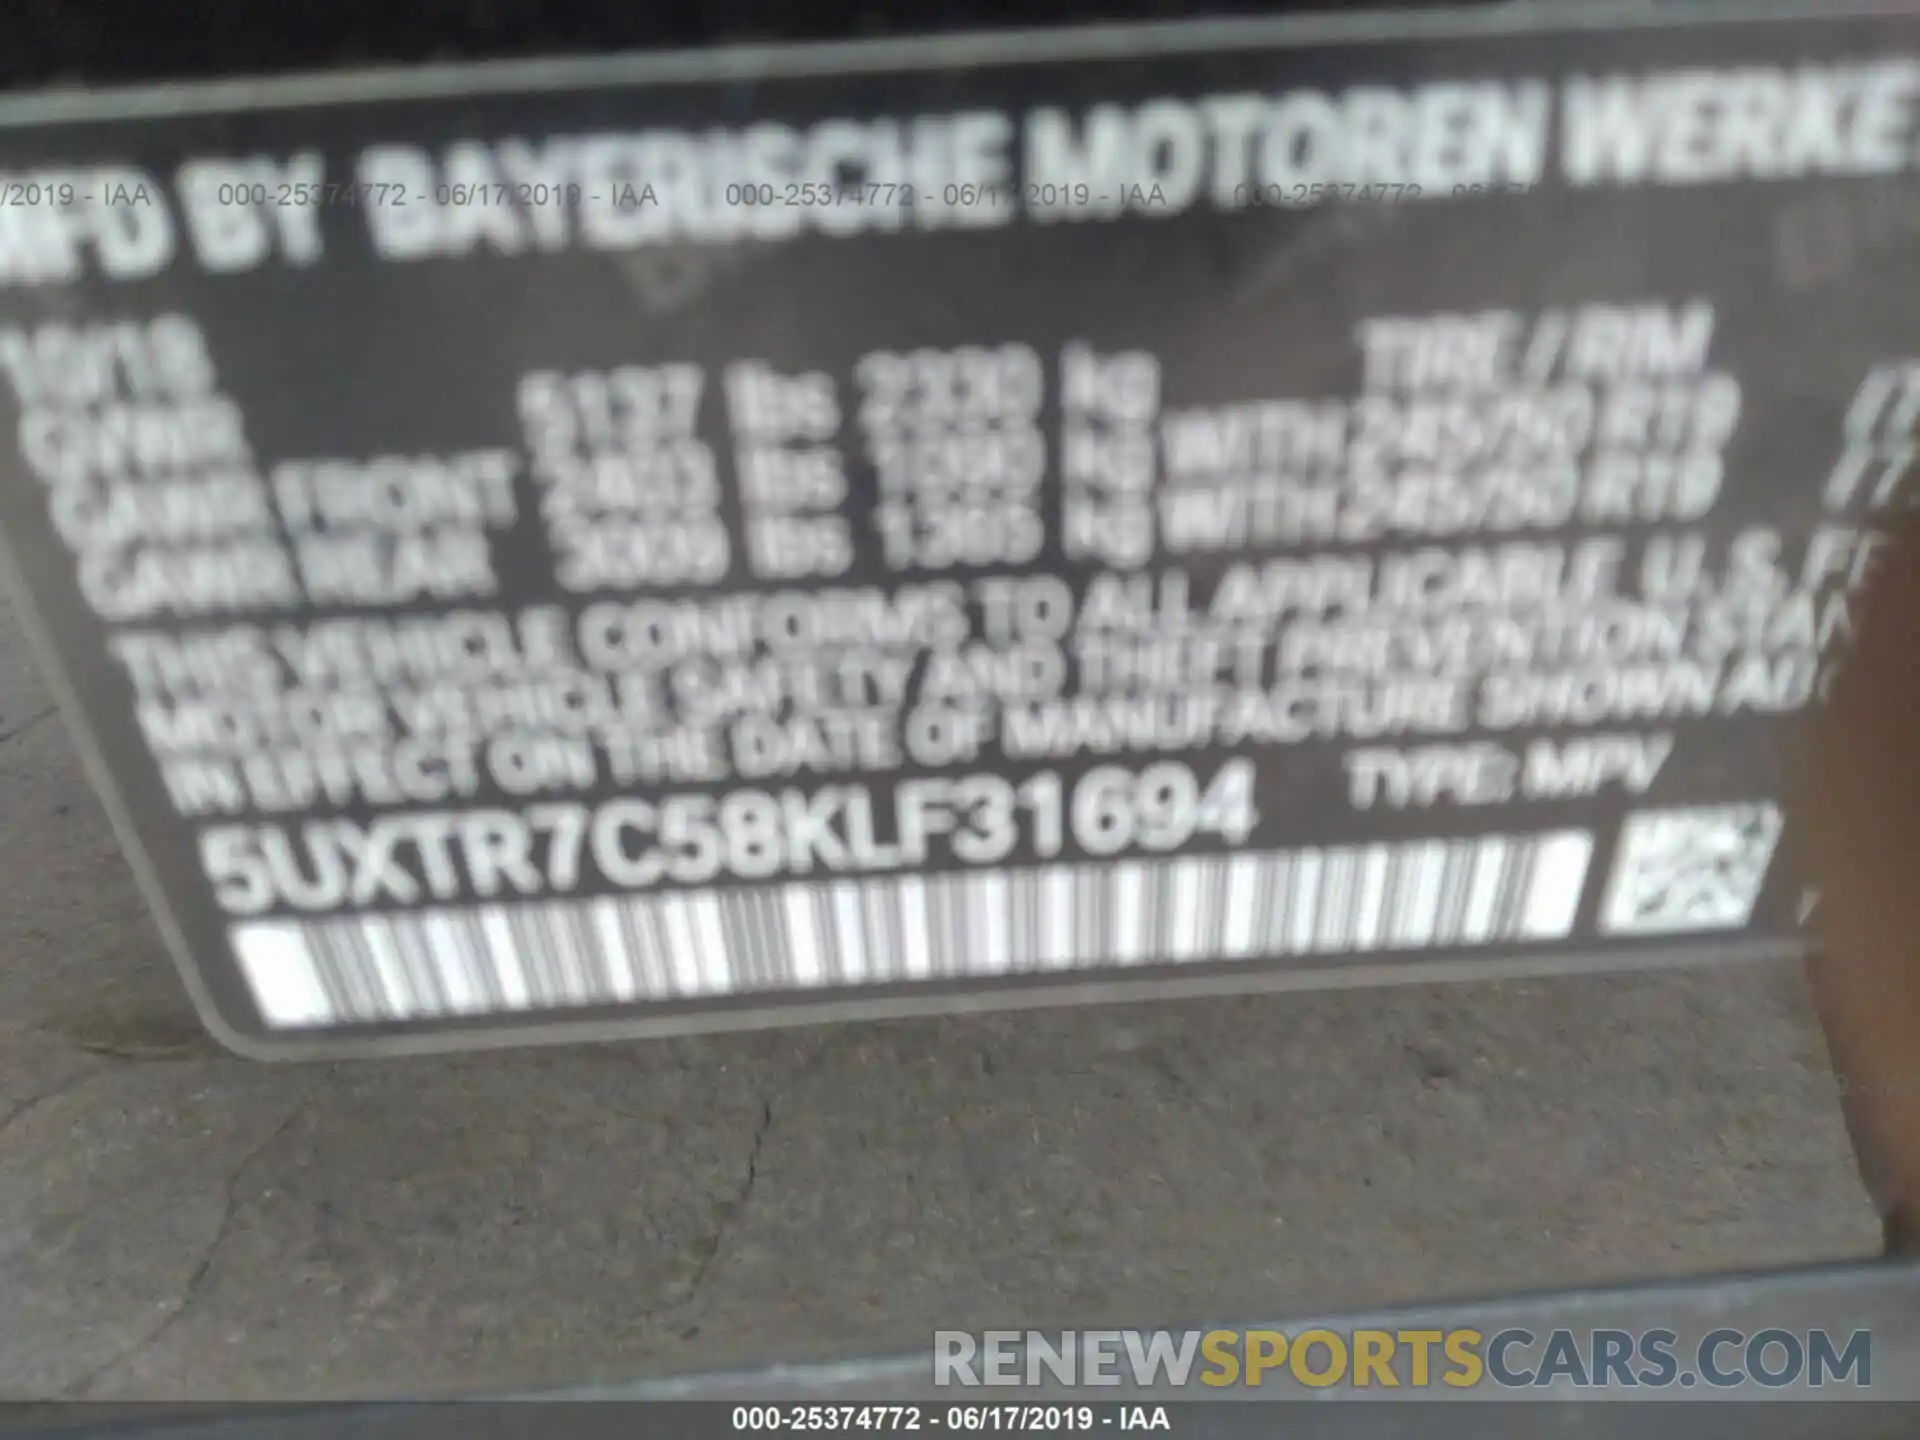 9 Photograph of a damaged car 5UXTR7C58KLF31694 BMW X3 2019